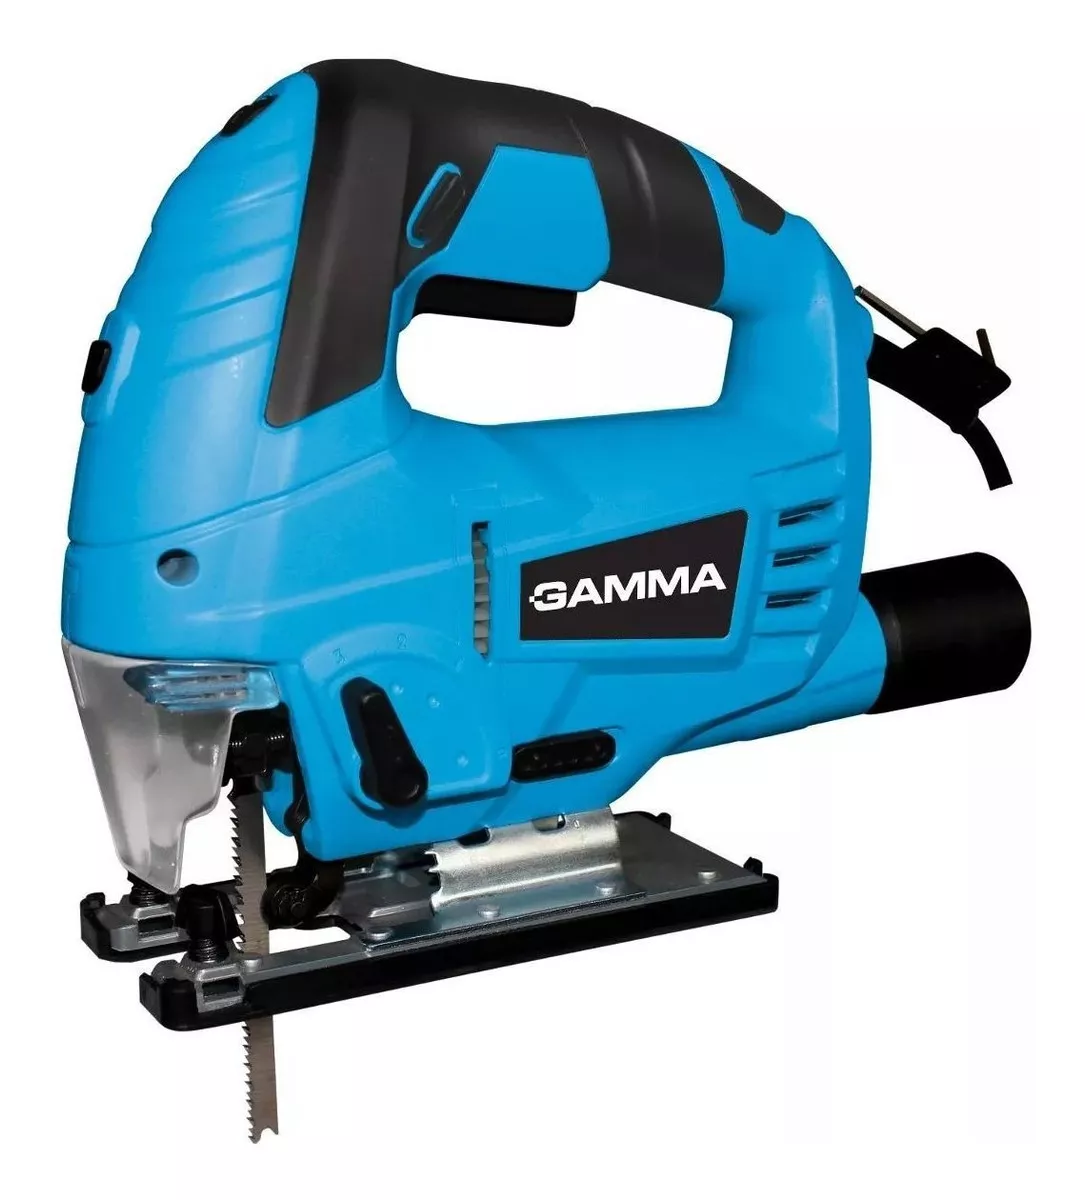 Primera imagen para búsqueda de sierra caladora gamma 600w usada